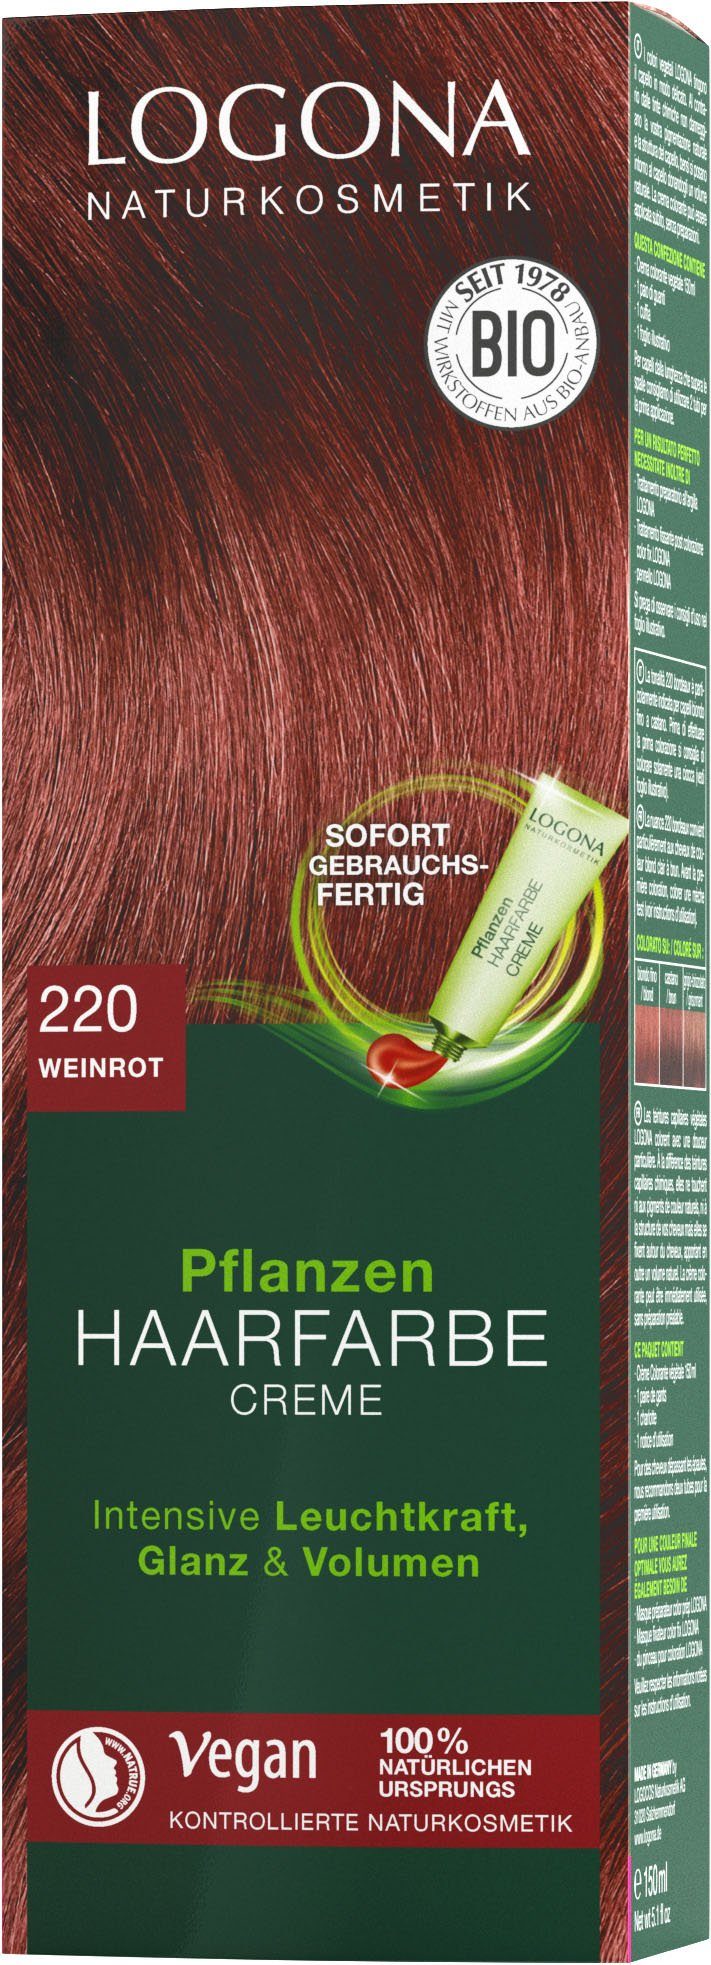 LOGONA Haarfarbe weinrot Logona Pflanzen-Haarfarbe Creme 220